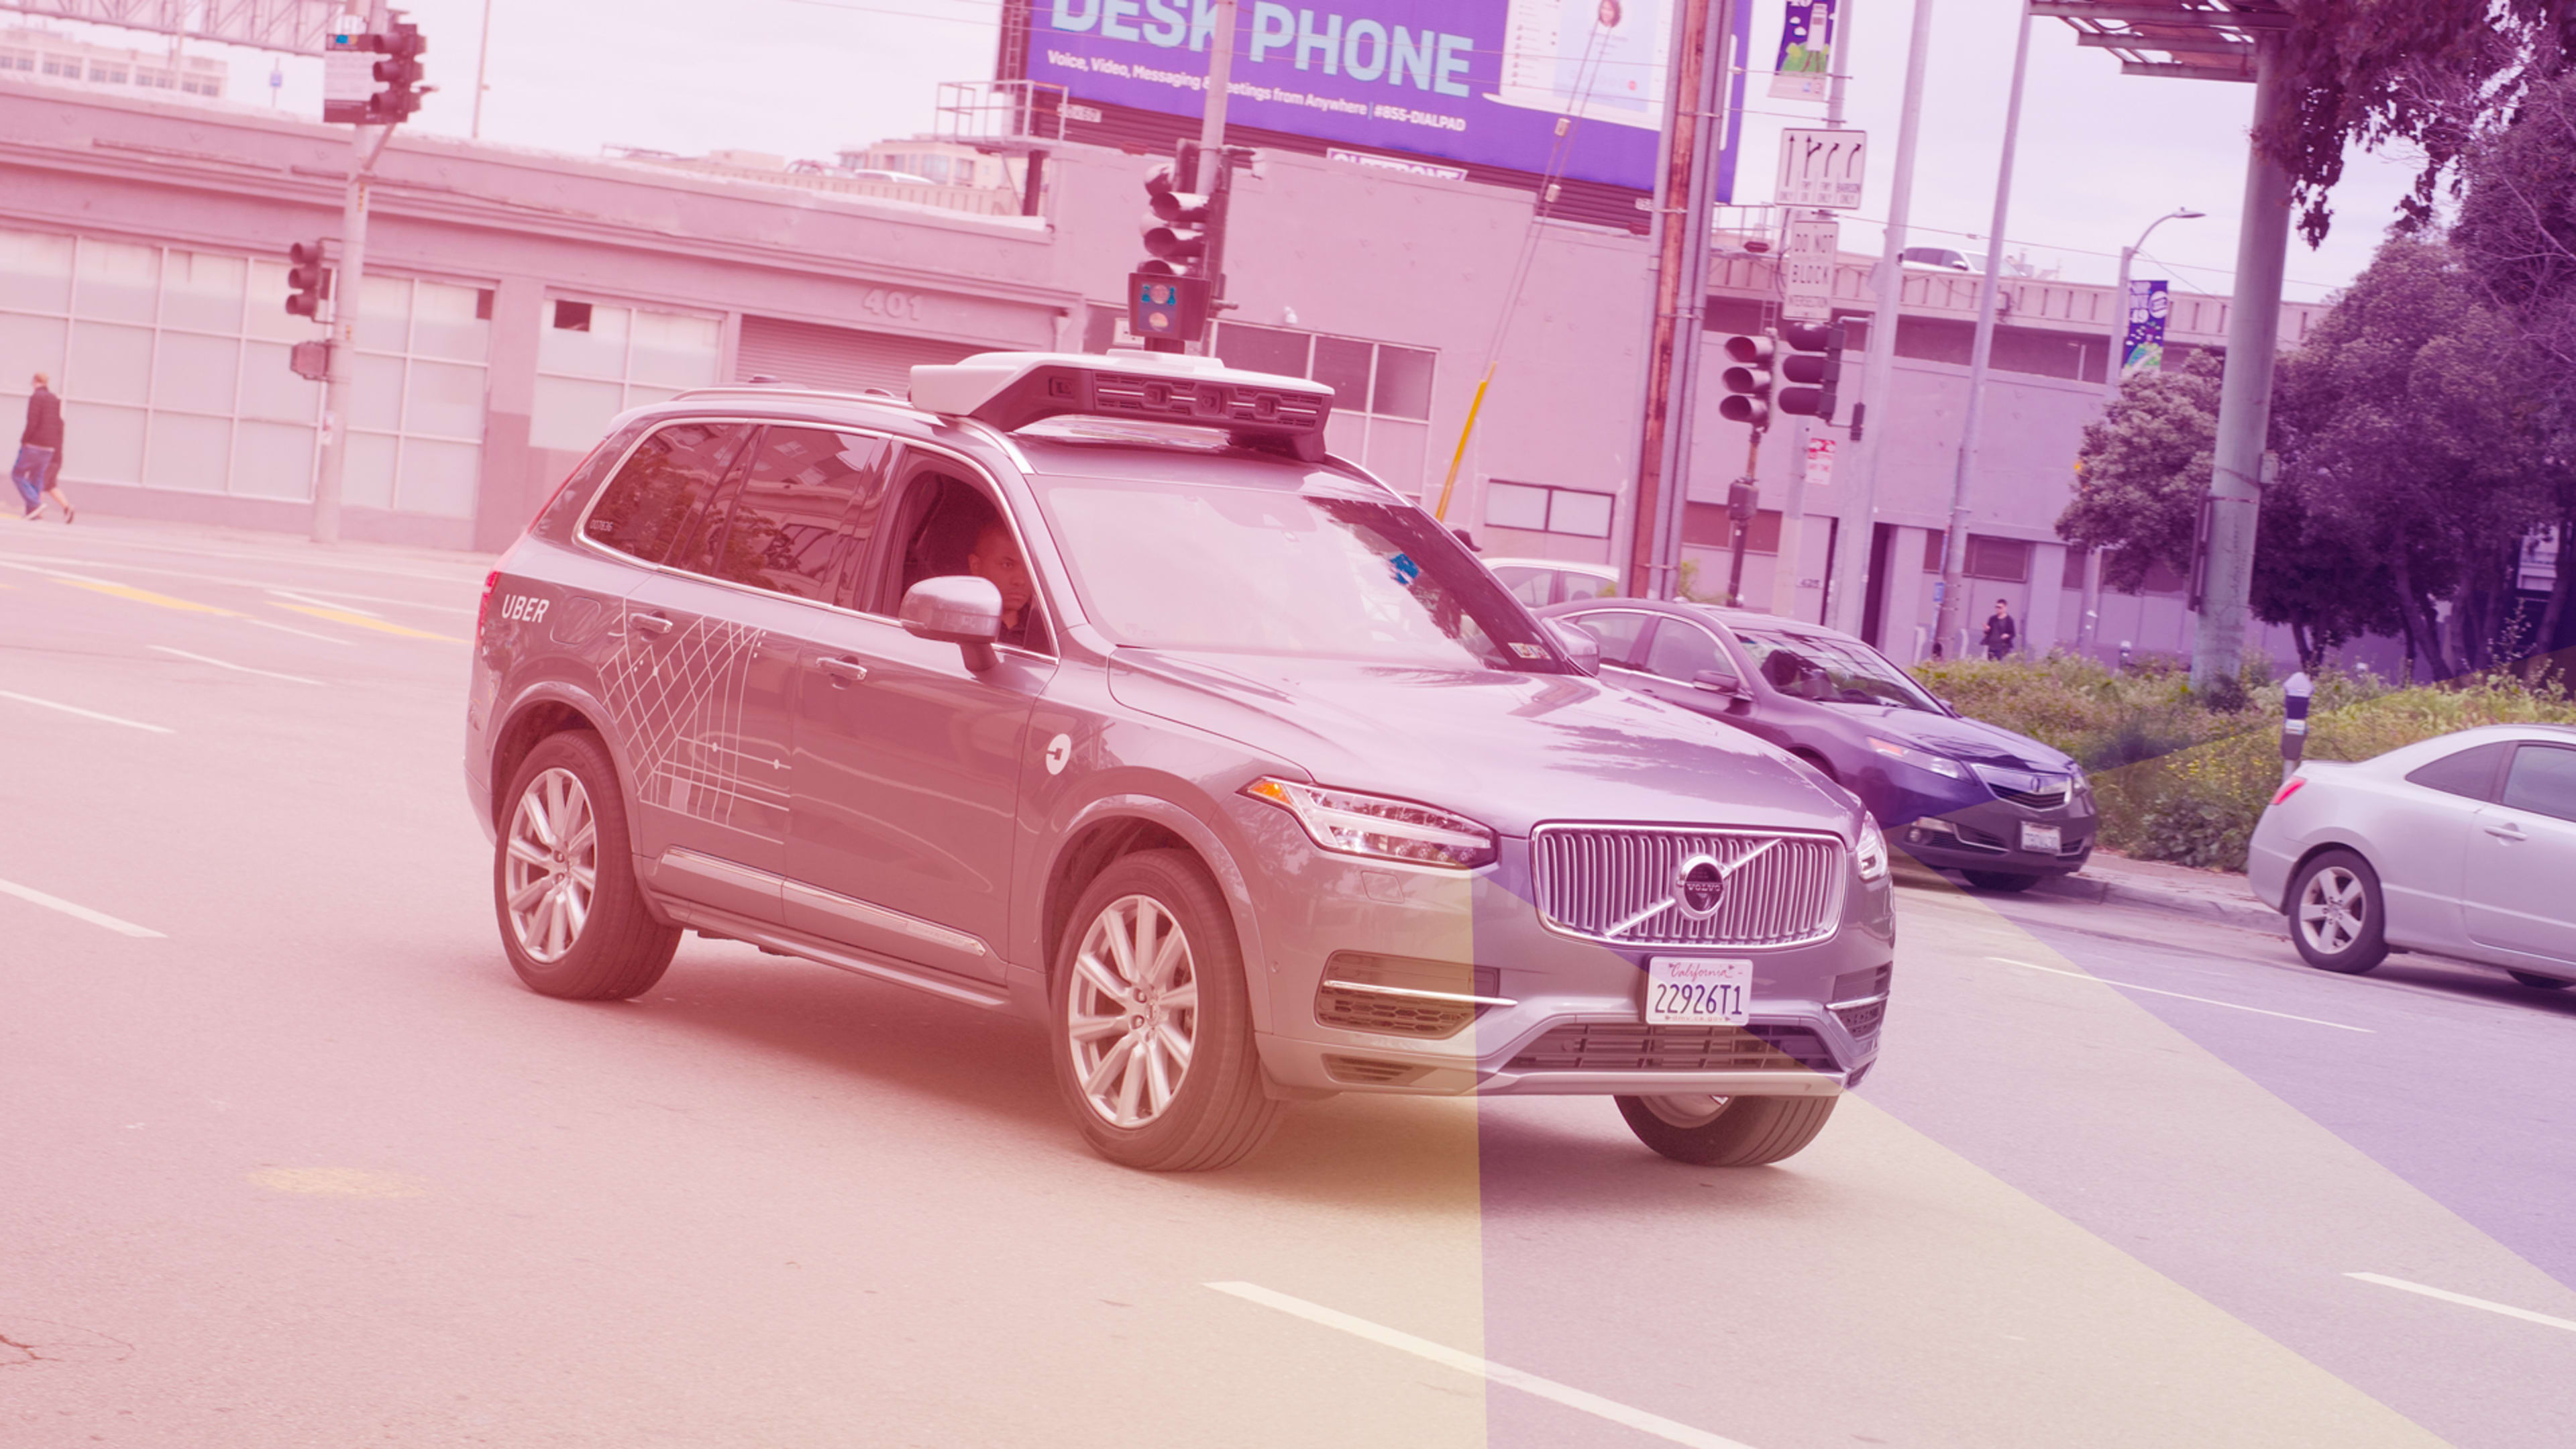 Arizona crash report reveals troubling flaws in Uber’s self-driving cars